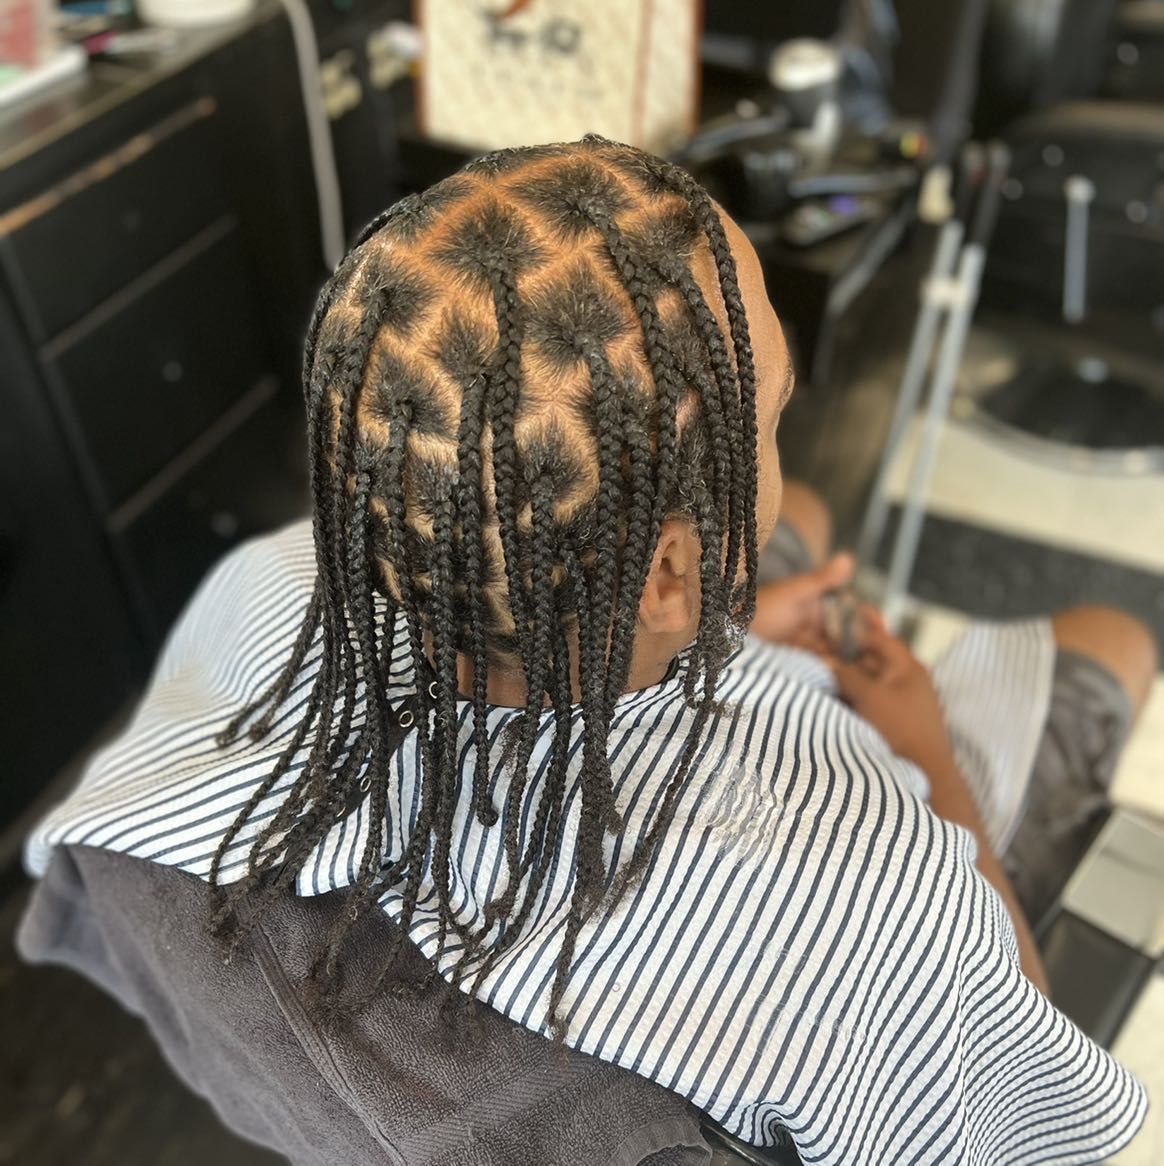 Basic MEN box braids/2 strand twist natural hair portfolio